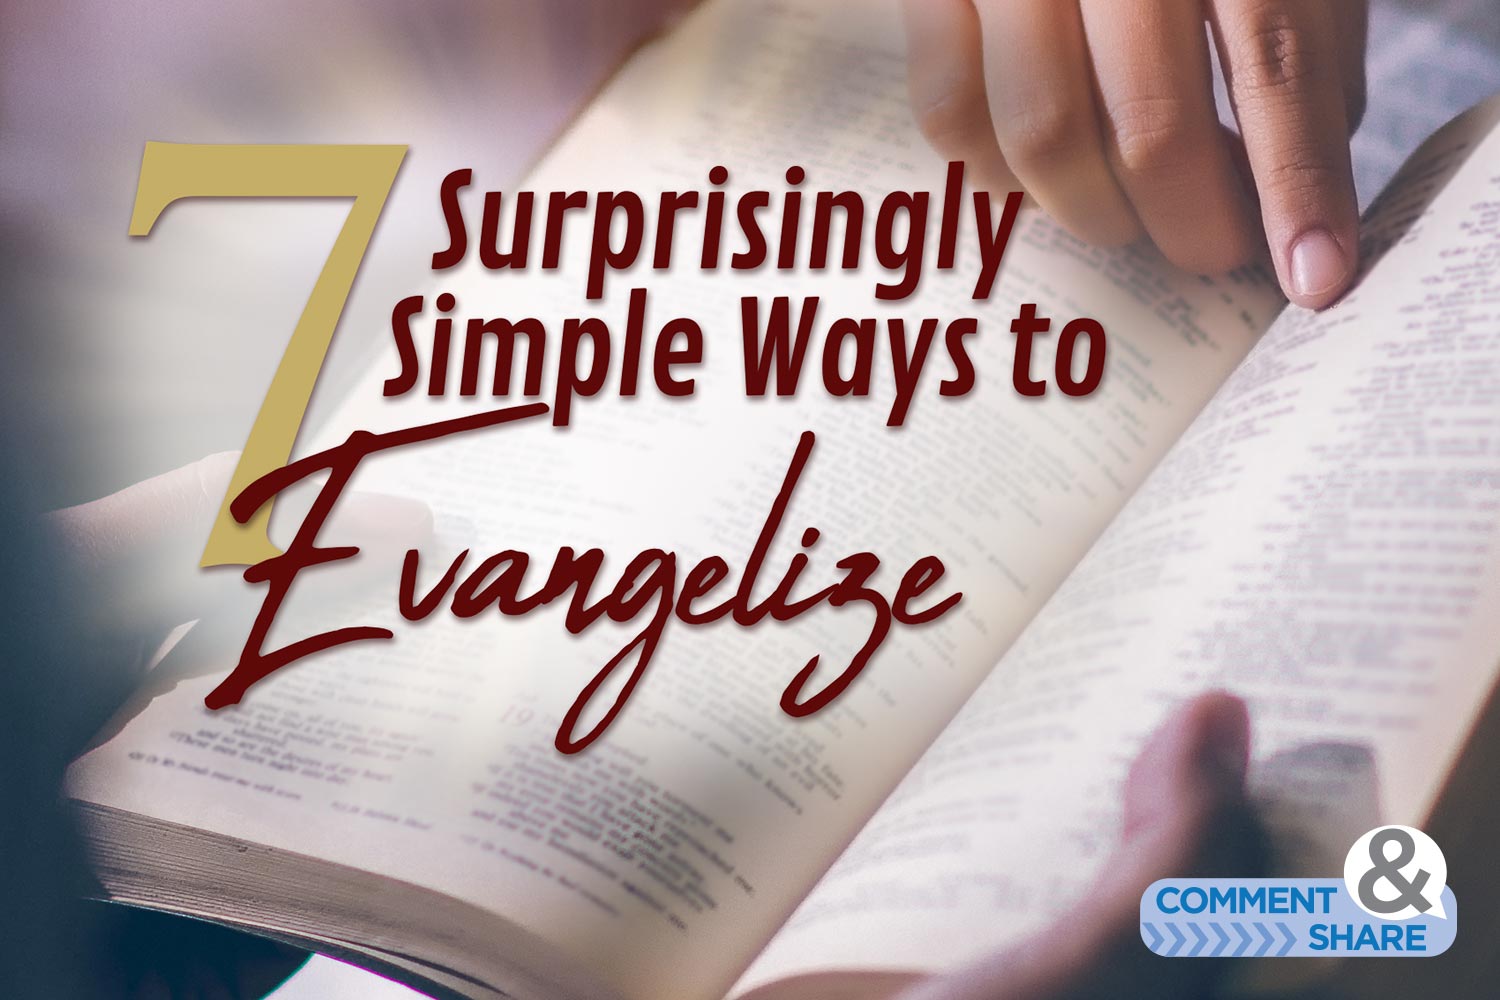 7 Surprisingly Simple Ways to Evangelize